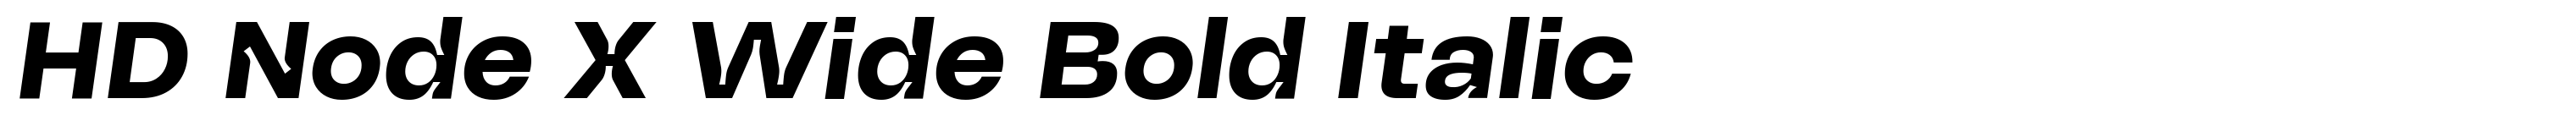 HD Node X Wide Bold Italic